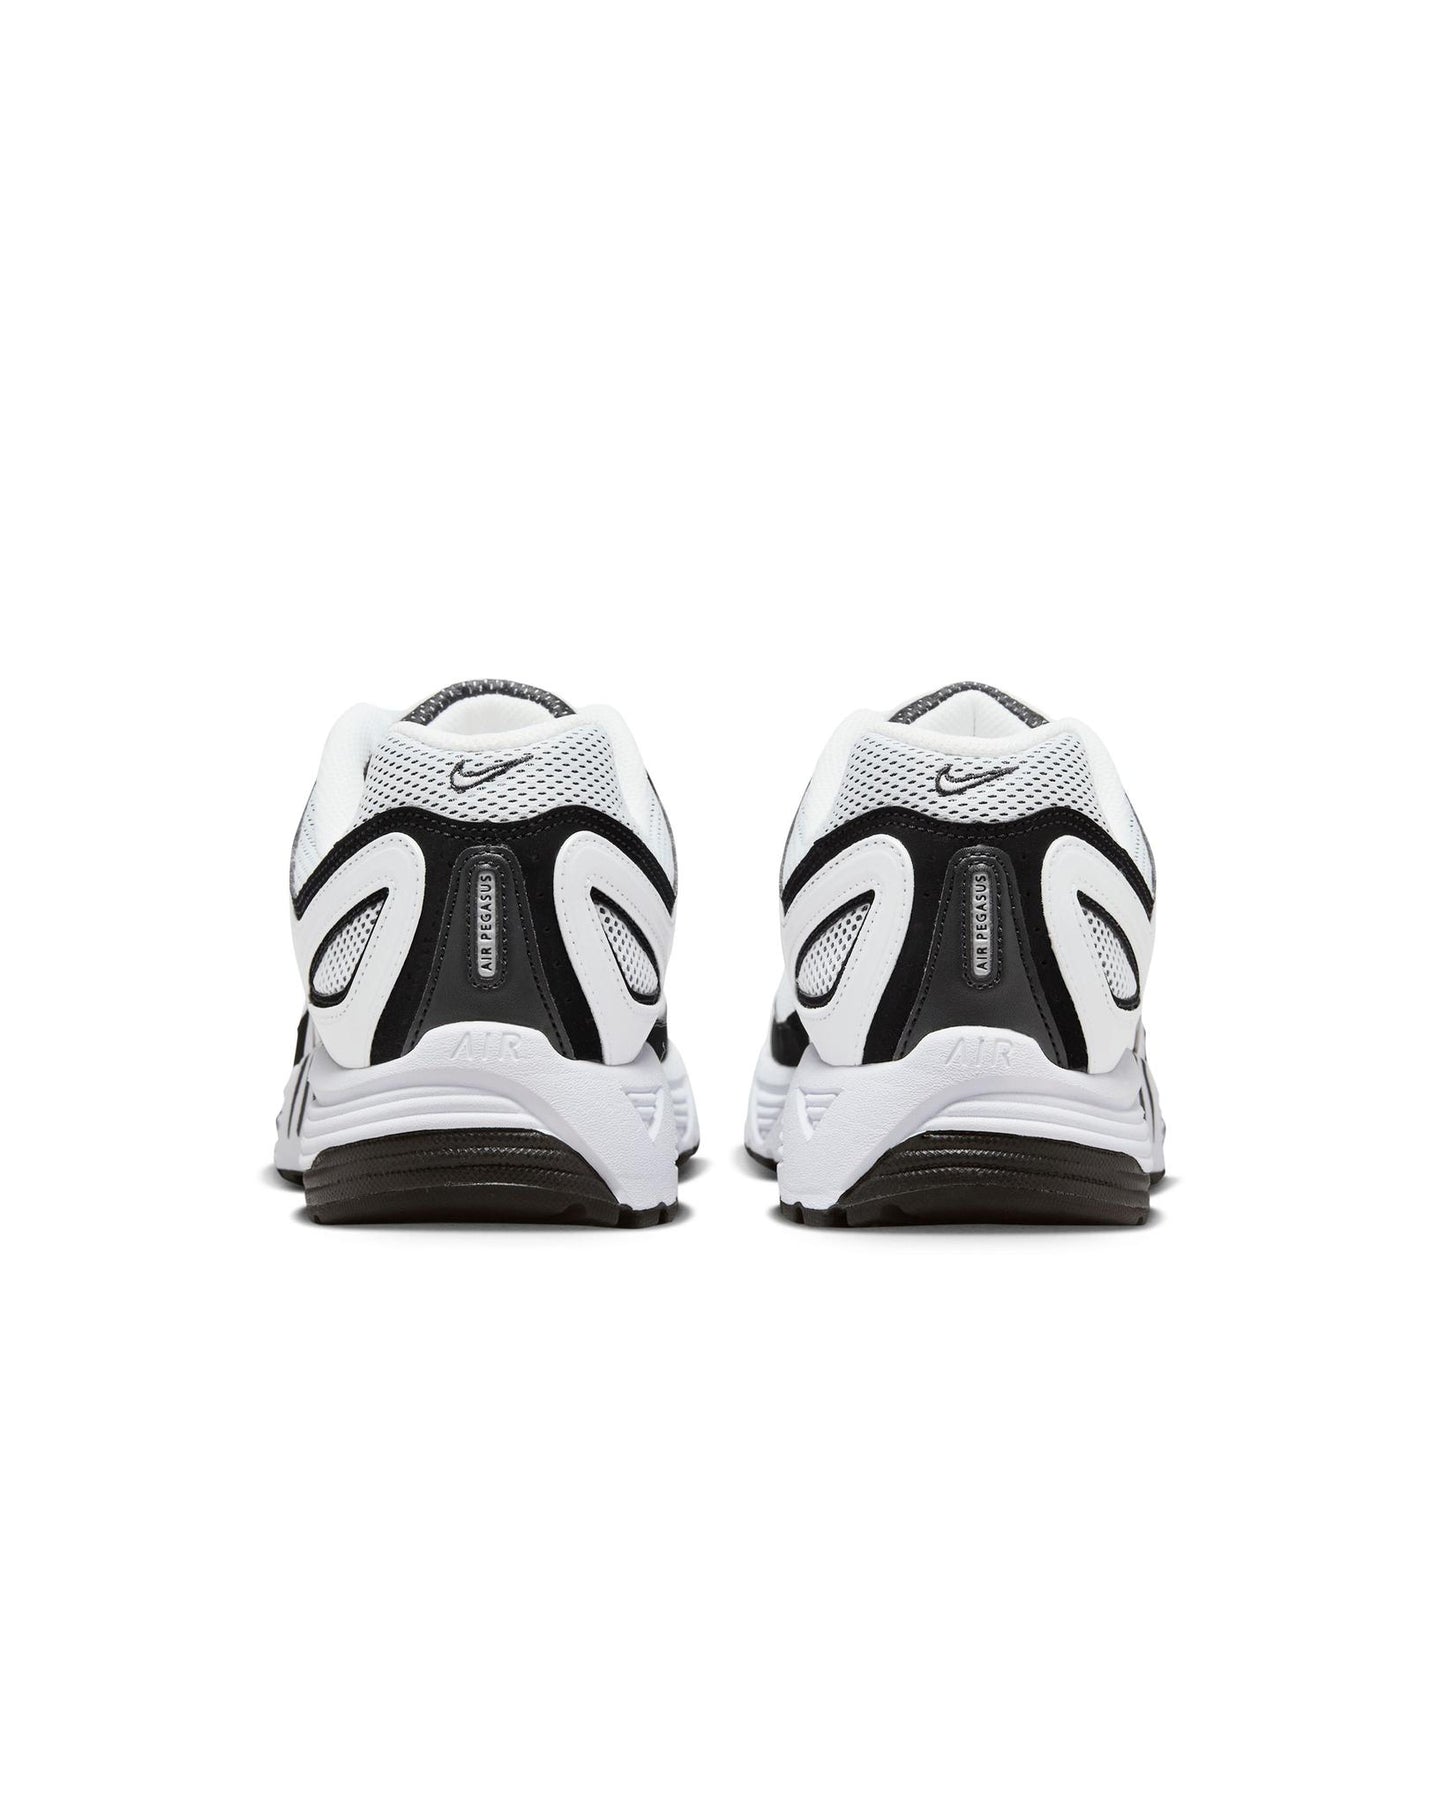 
                    
                      Nike Air Peg 2K5 "White and Black"
                    
                  